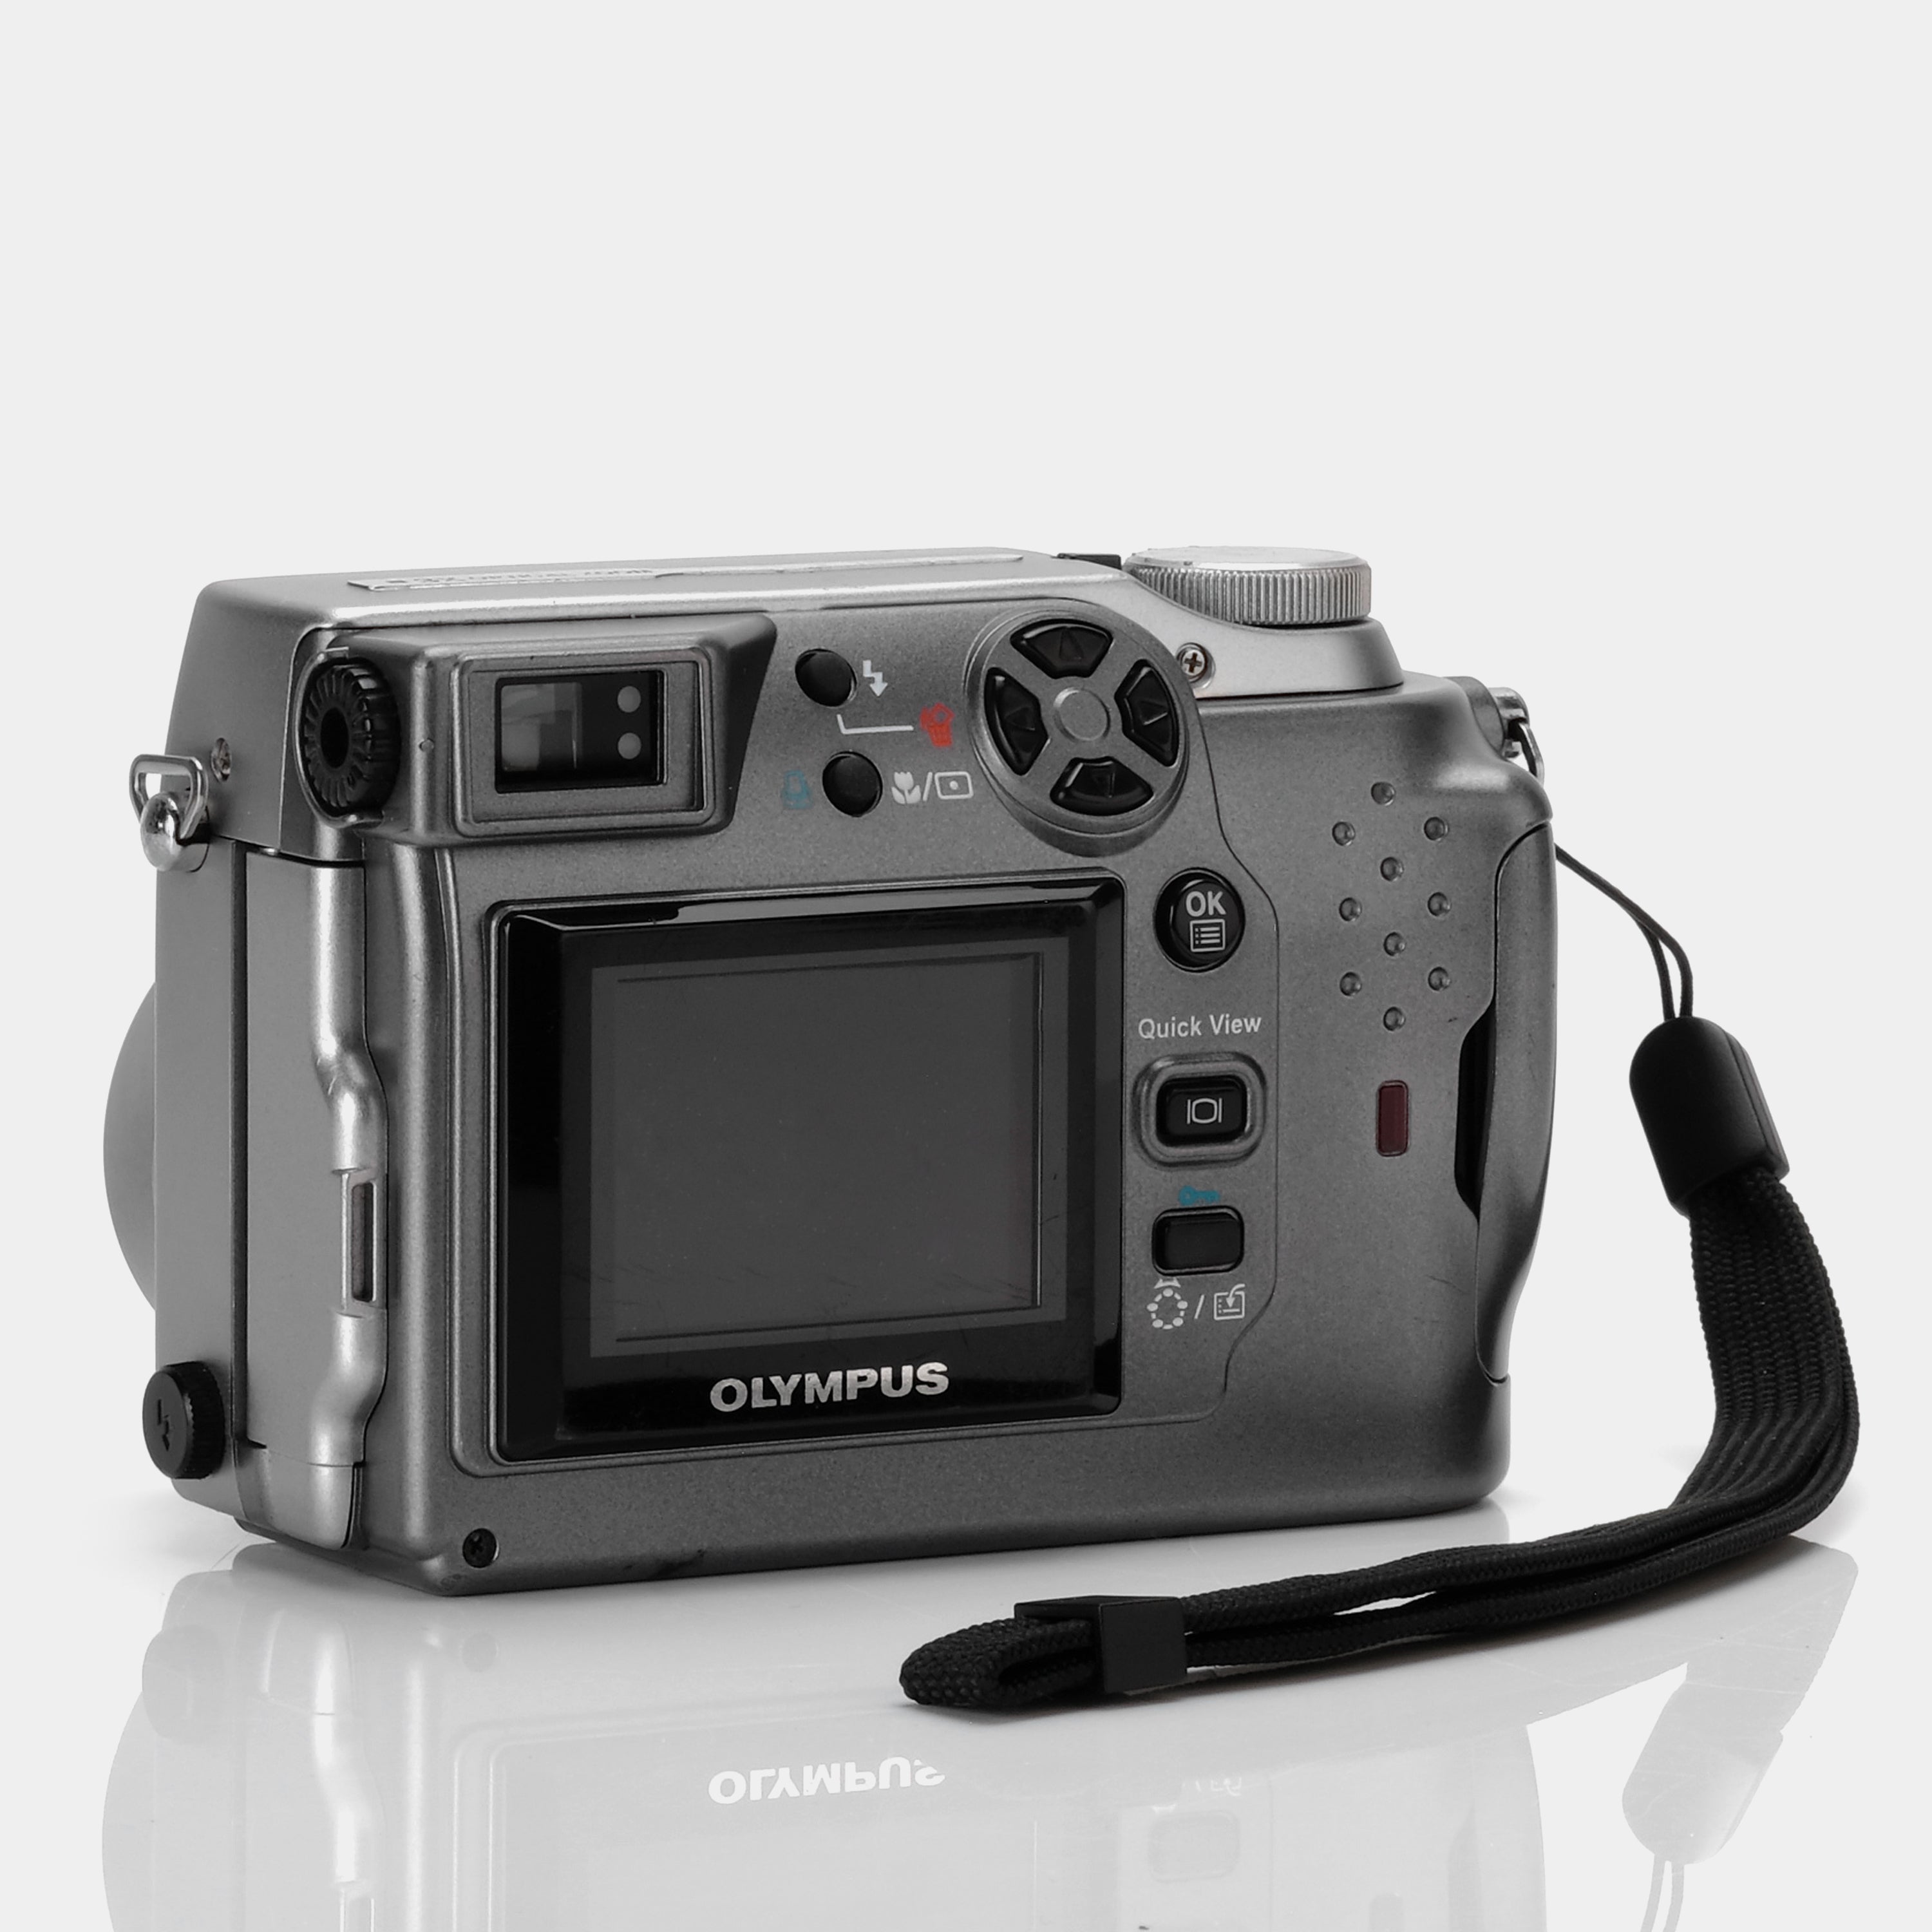 Olympus Camedia C-4000 Point and Shoot Digital Camera